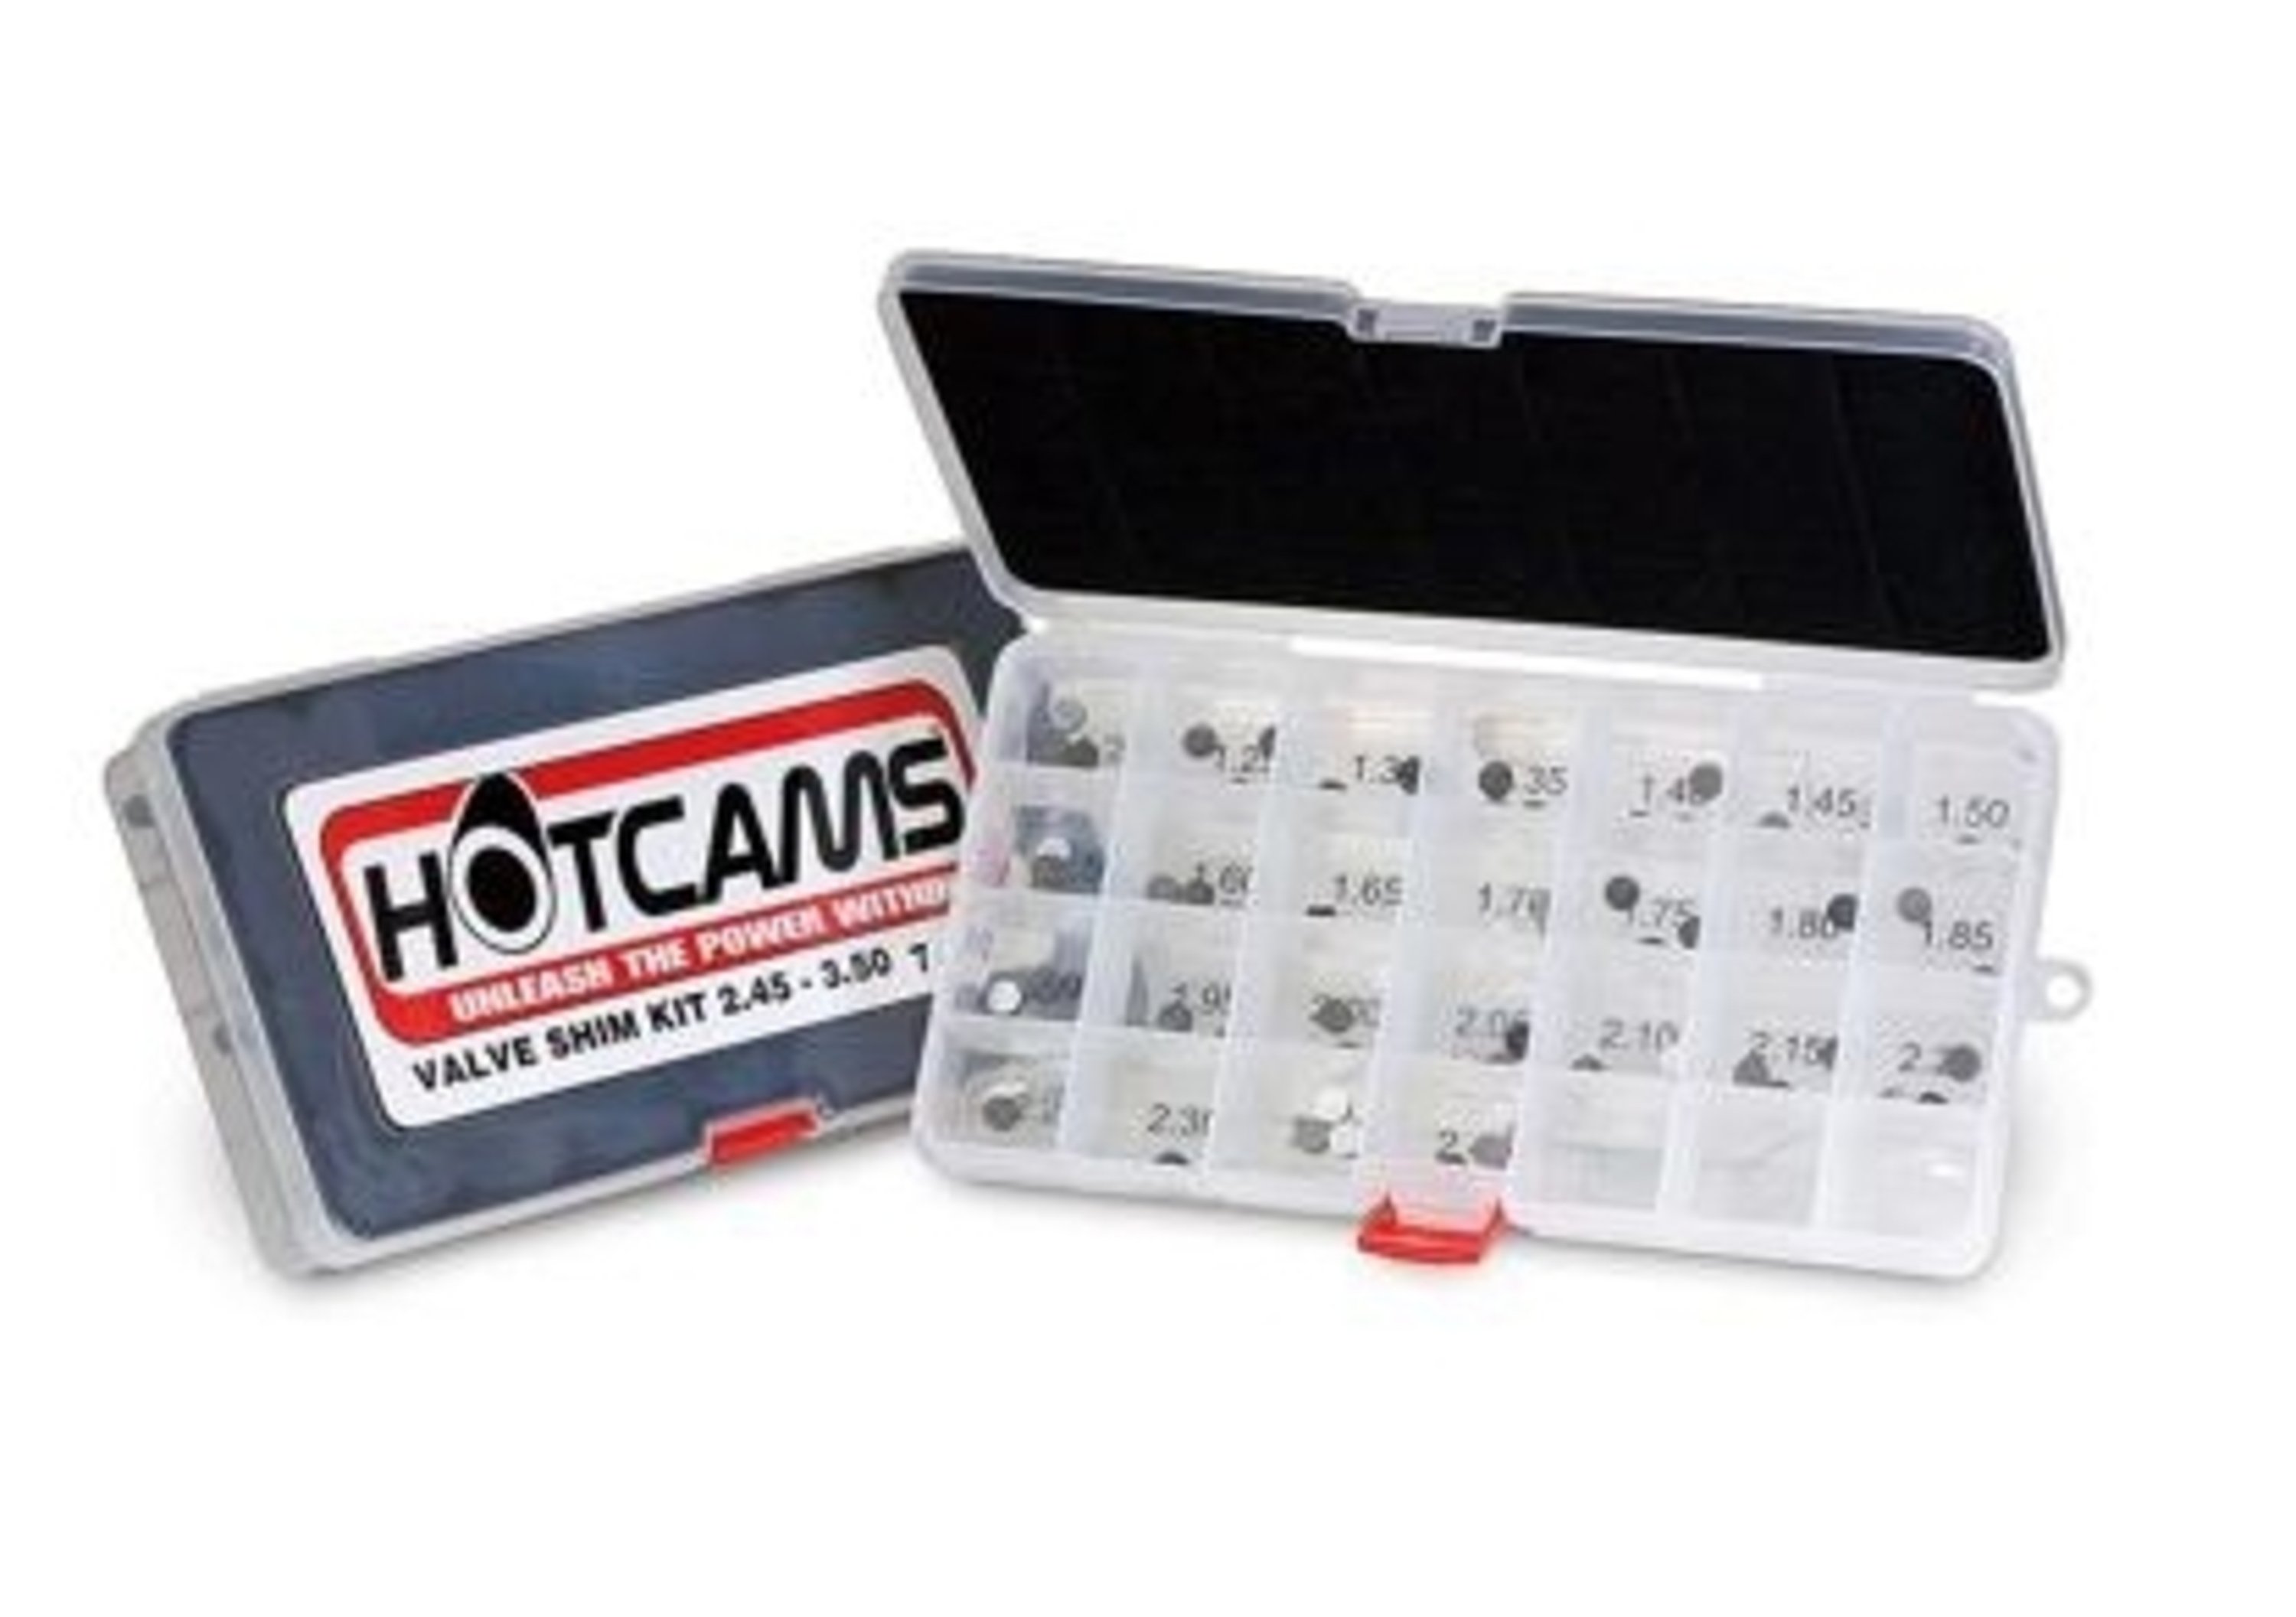 Spessori valvola calibrati Hot Cams